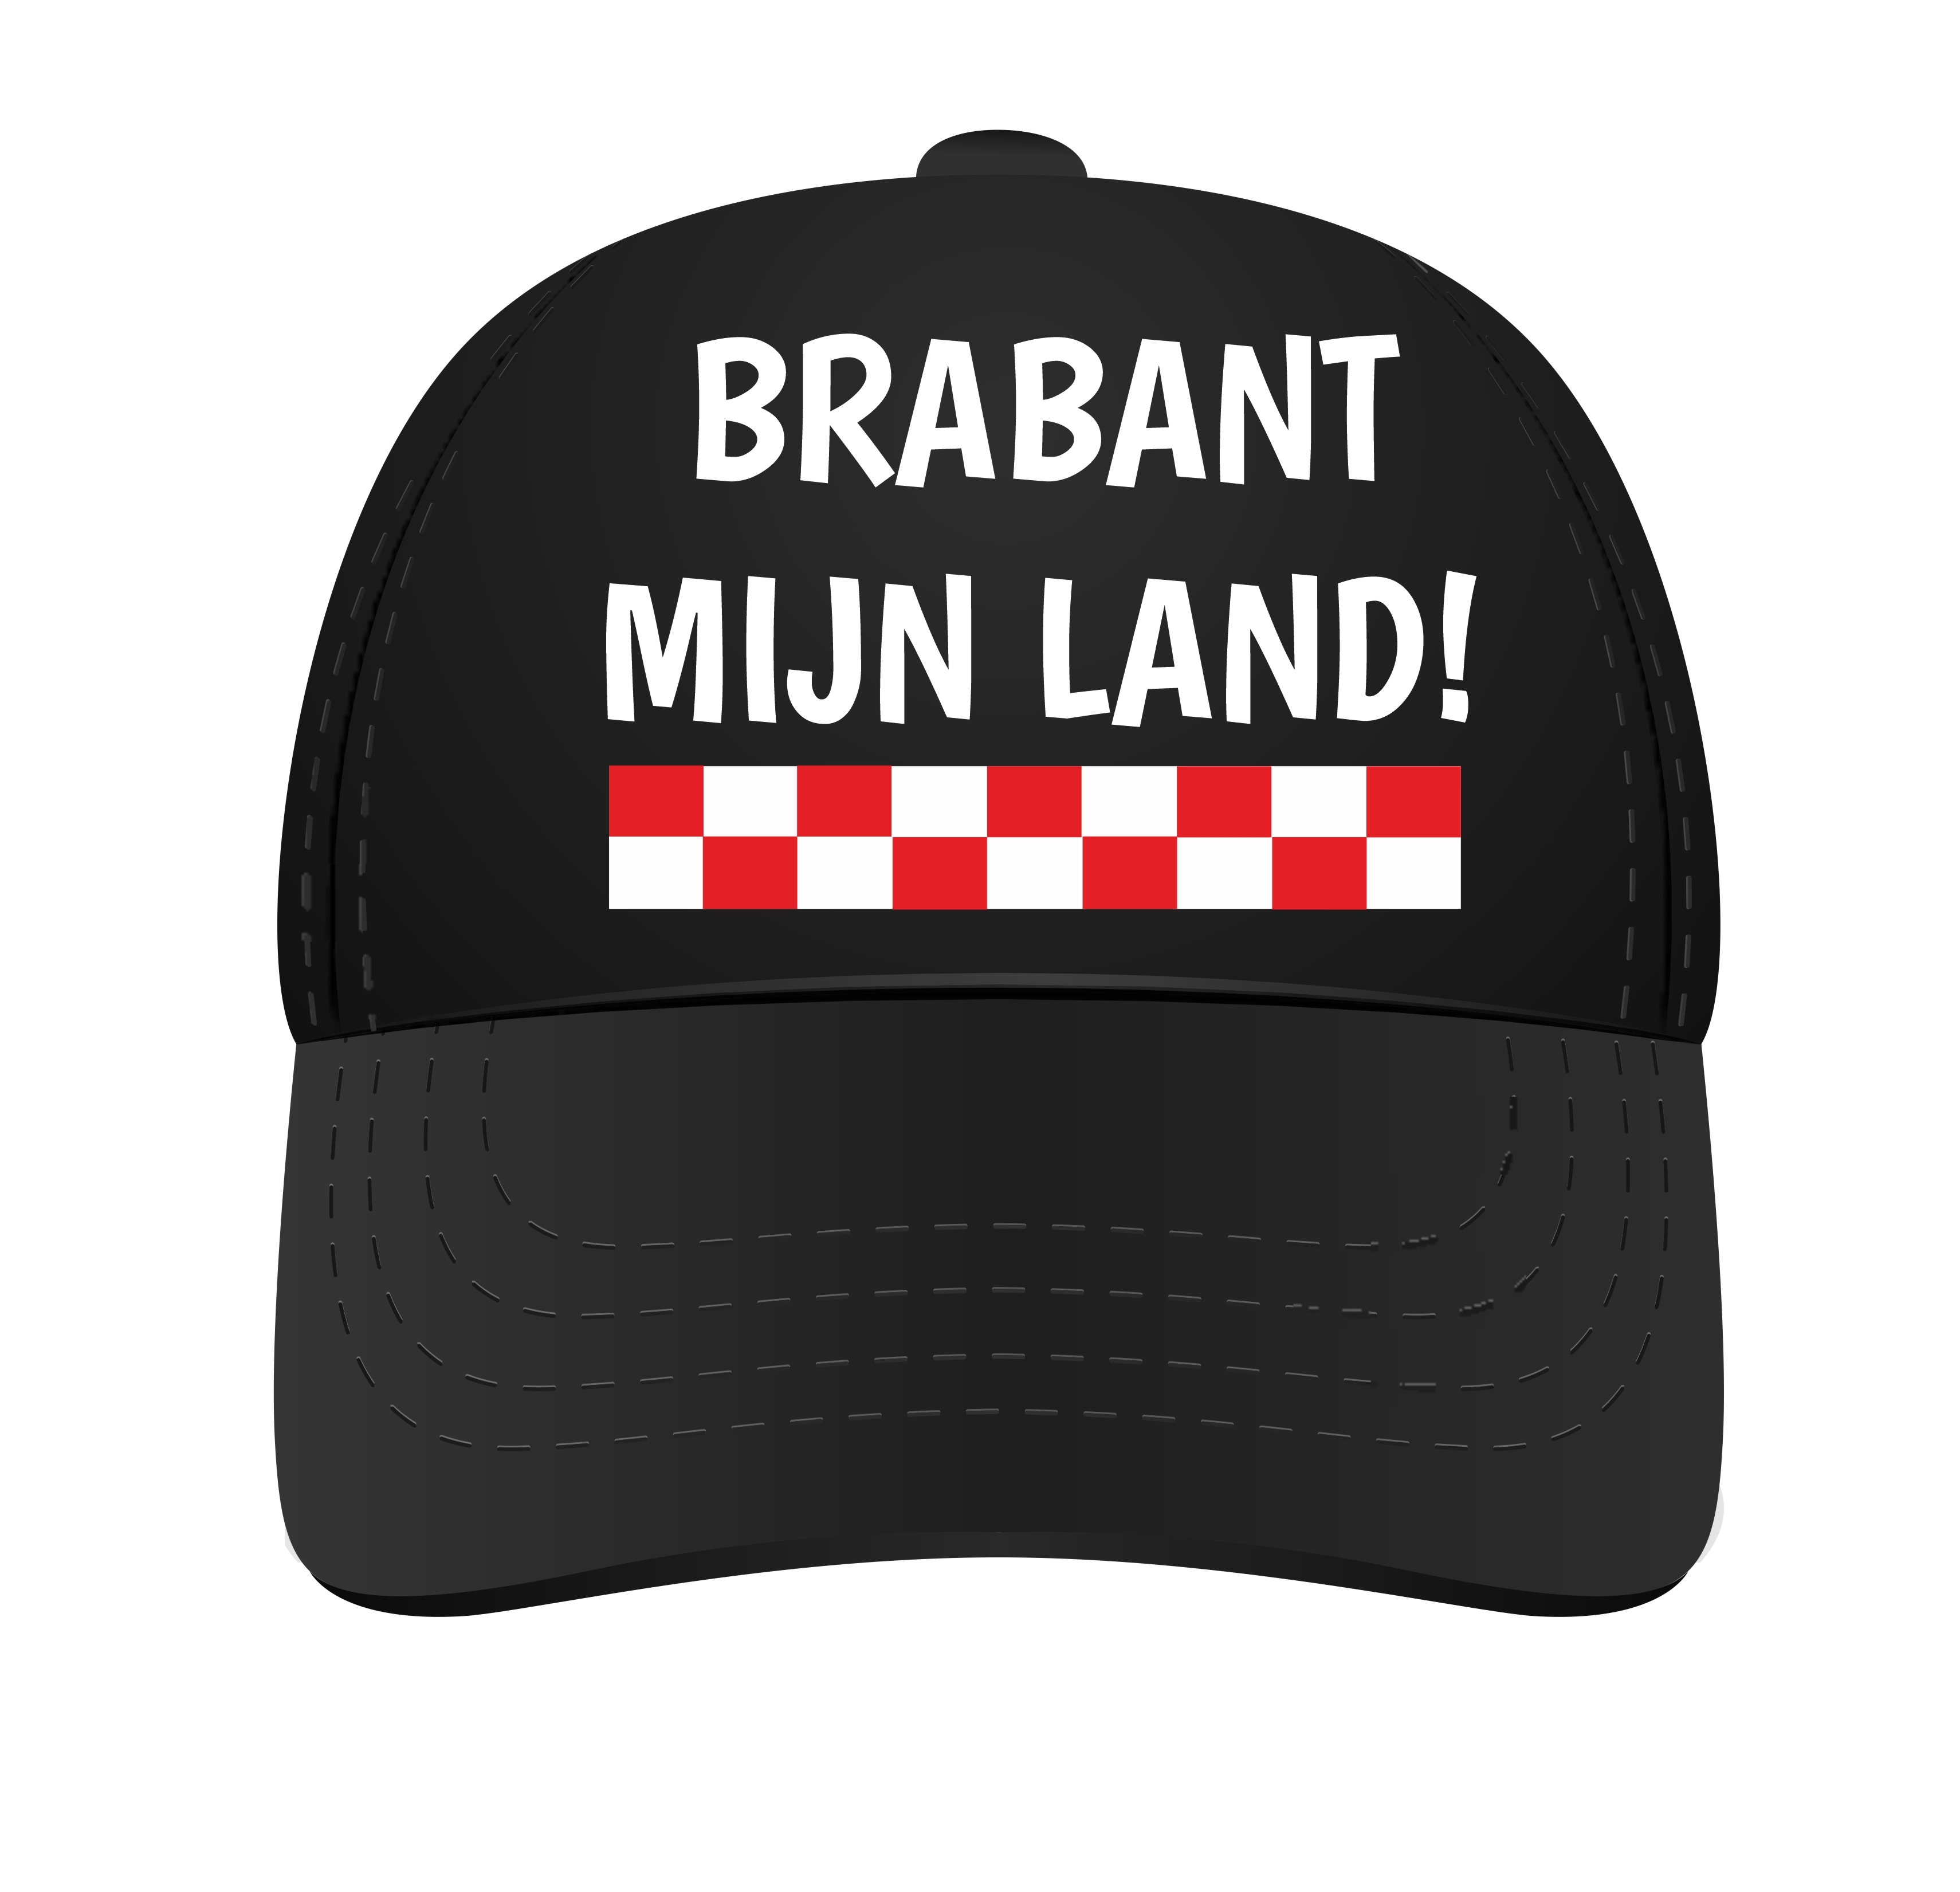 Pet Brabant mij land